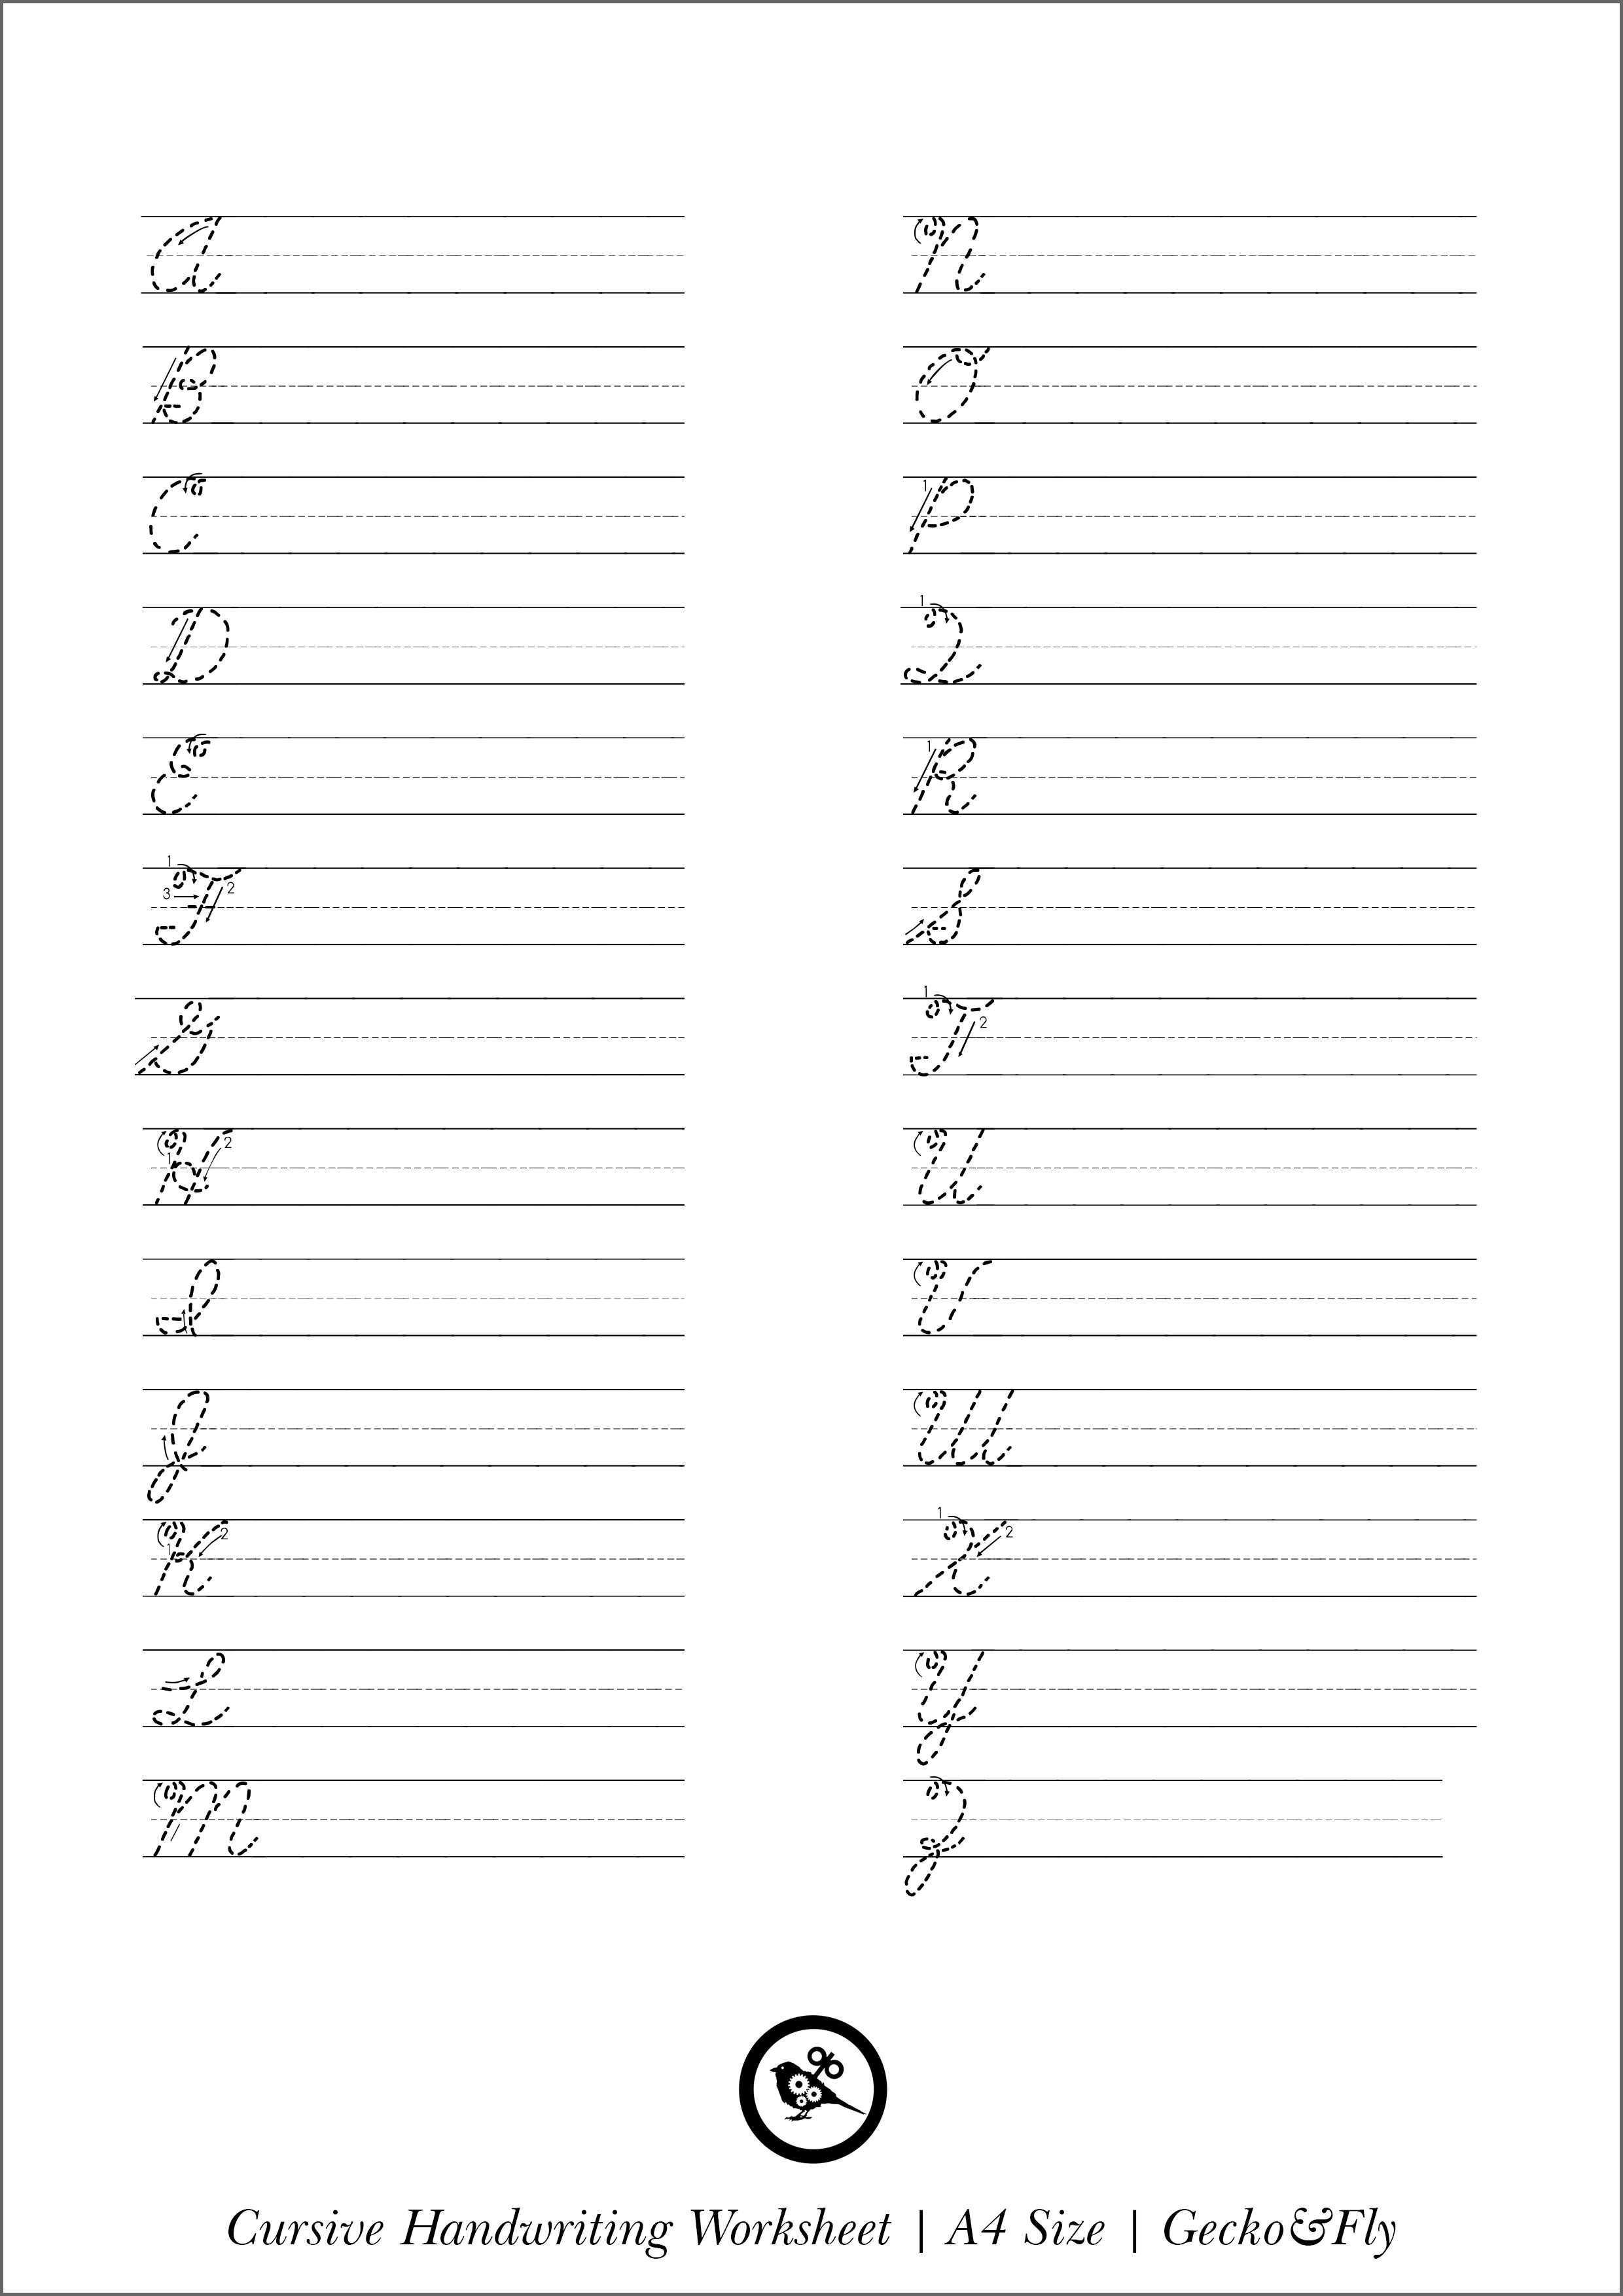 5 Printable Cursive Handwriting Worksheets For Beautiful Penmanship - Free Printable Script Writing Worksheets